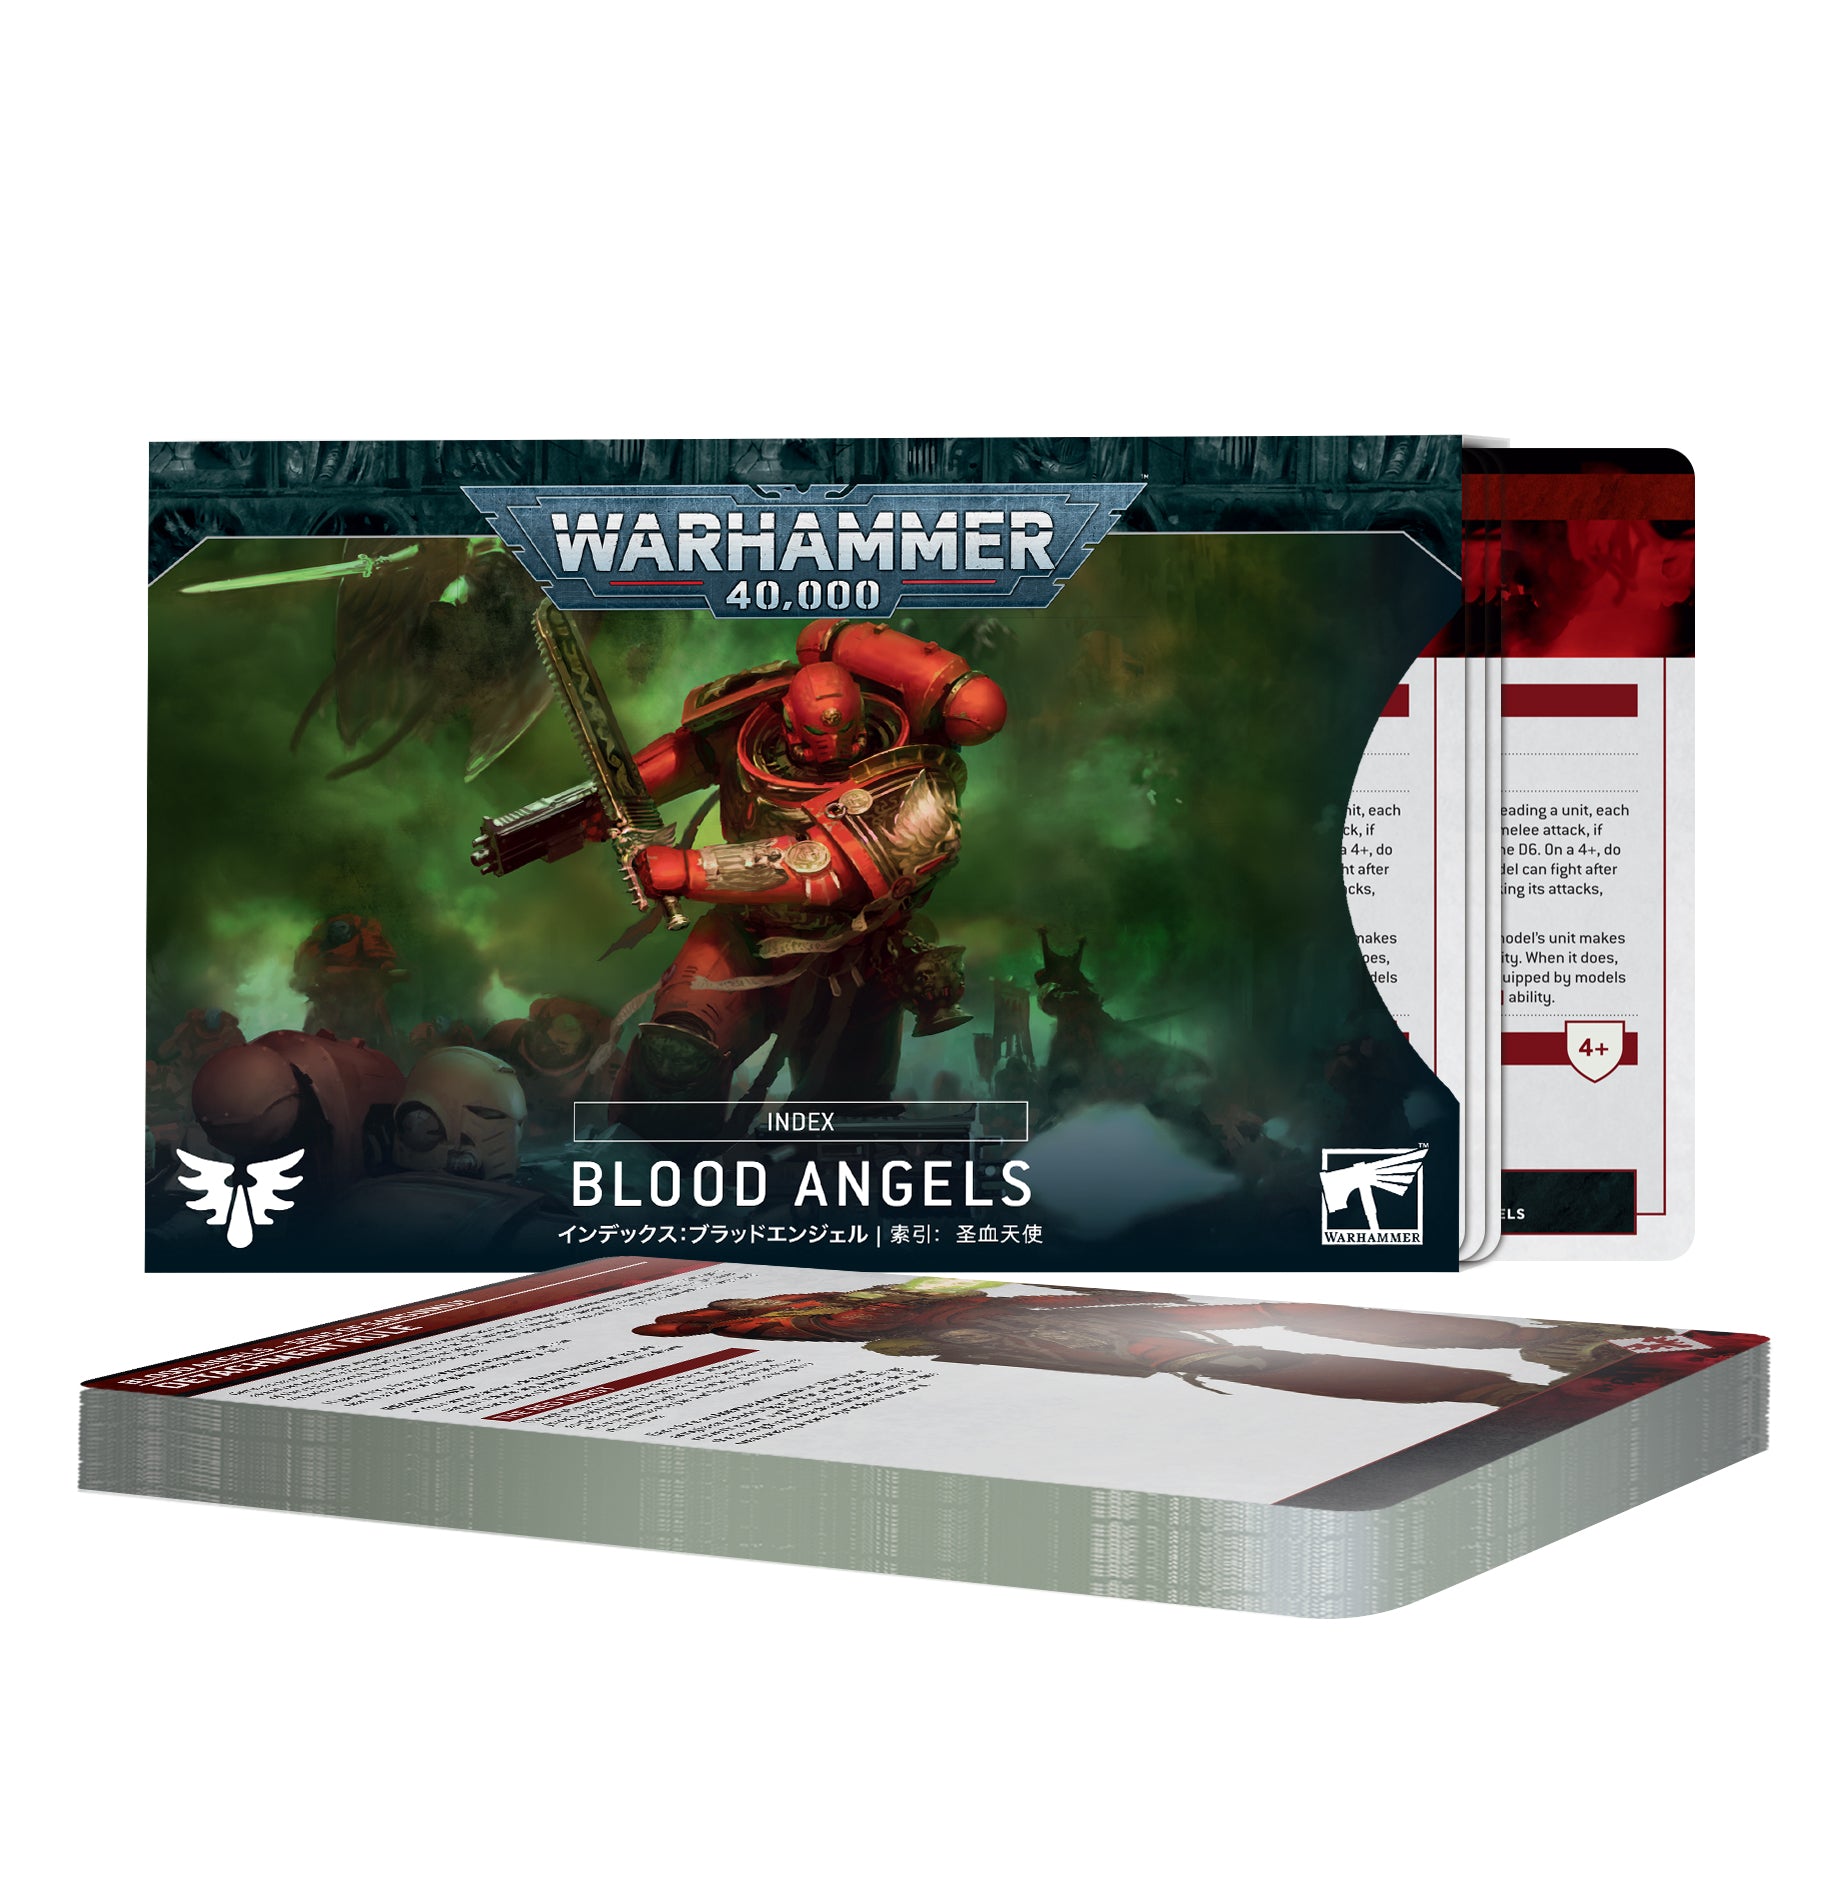 a box of blood angels warhammerer